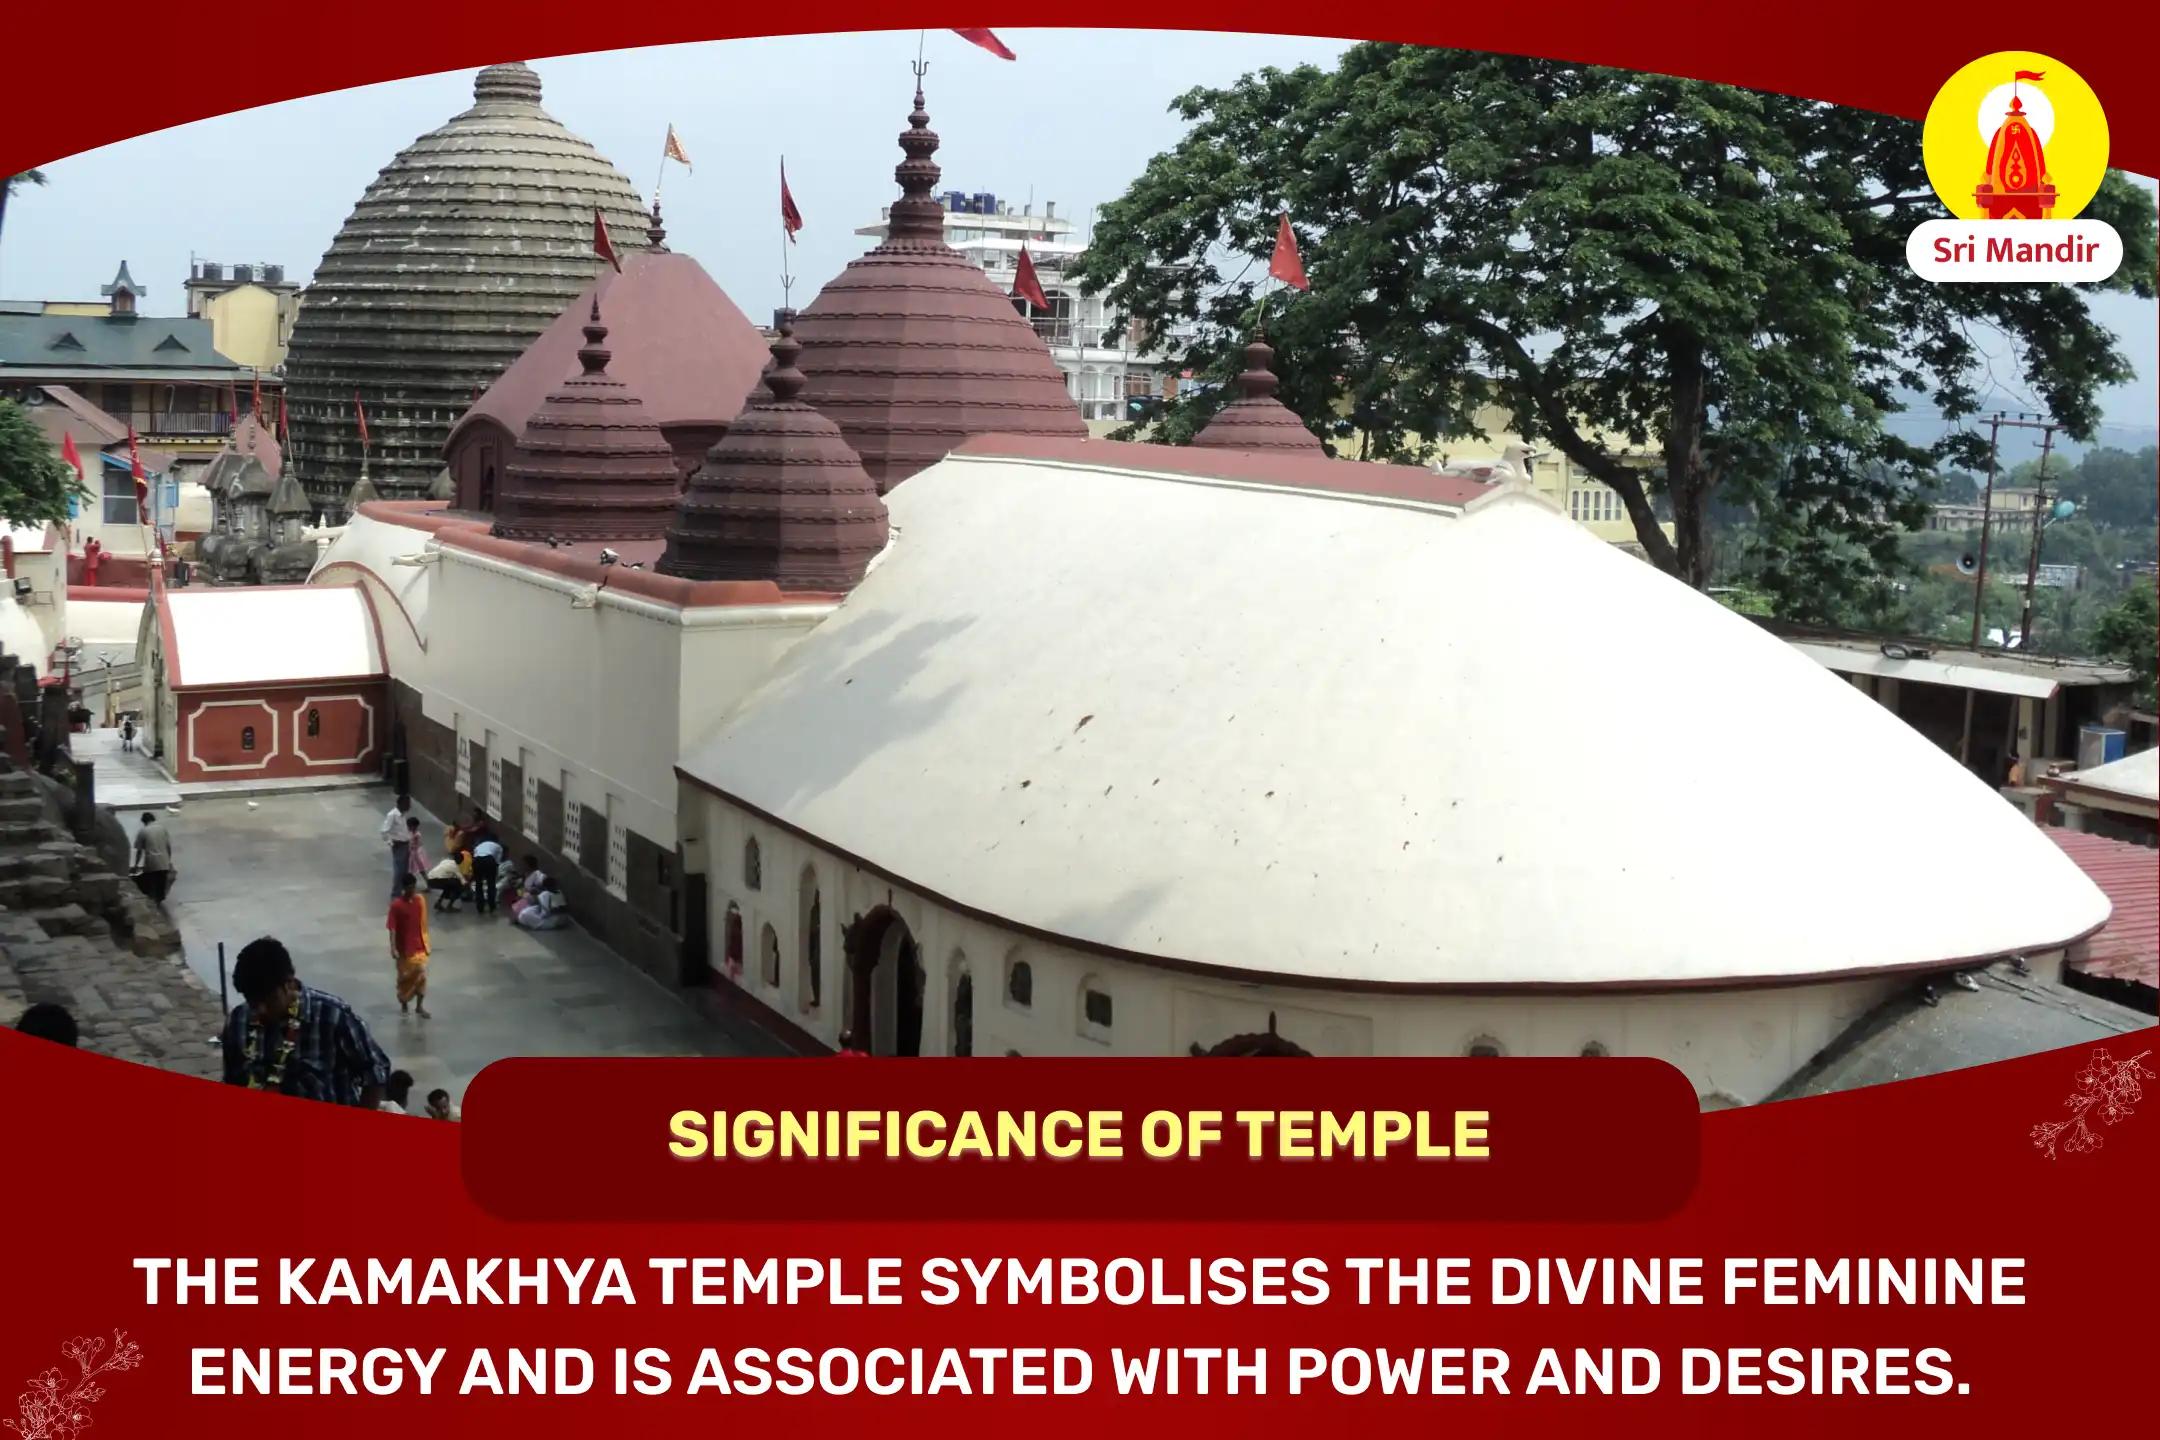 Shaktipeeth Special Sarva Manokamna Poorti Shri Kameshwari Tantrokta Maha Yagya for Fulfilment of All Desires